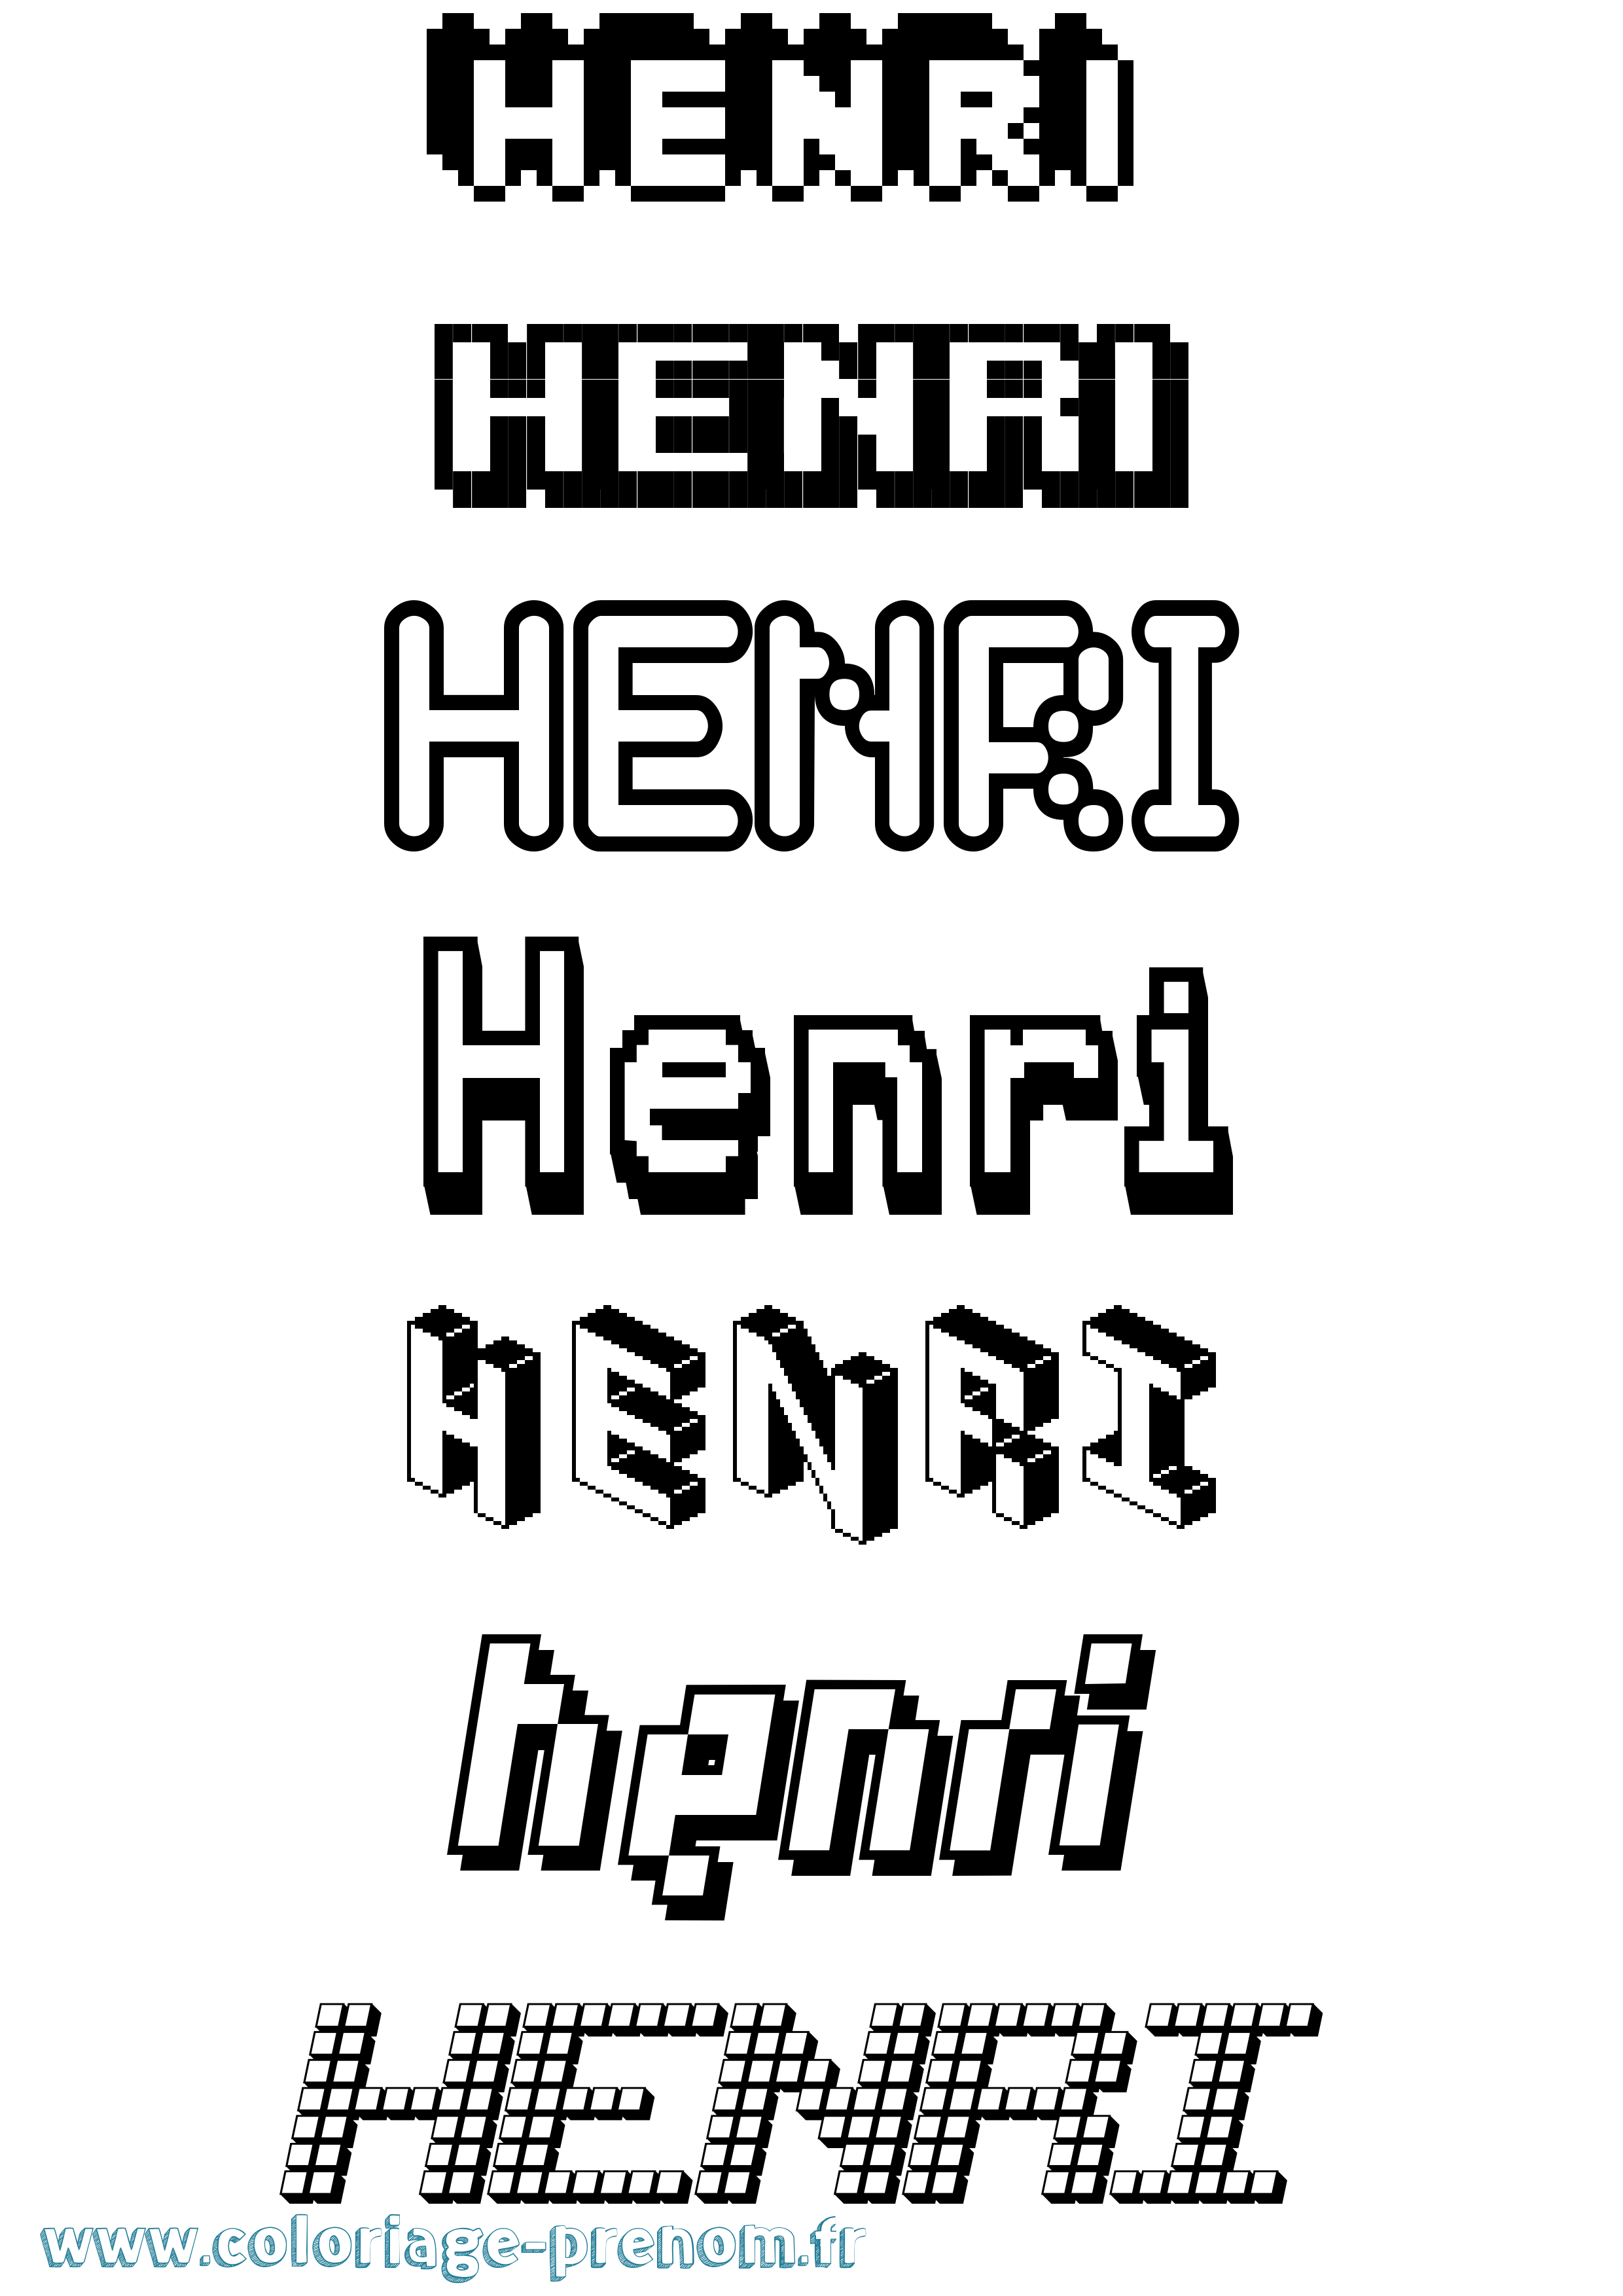 Coloriage prénom Henri Pixel